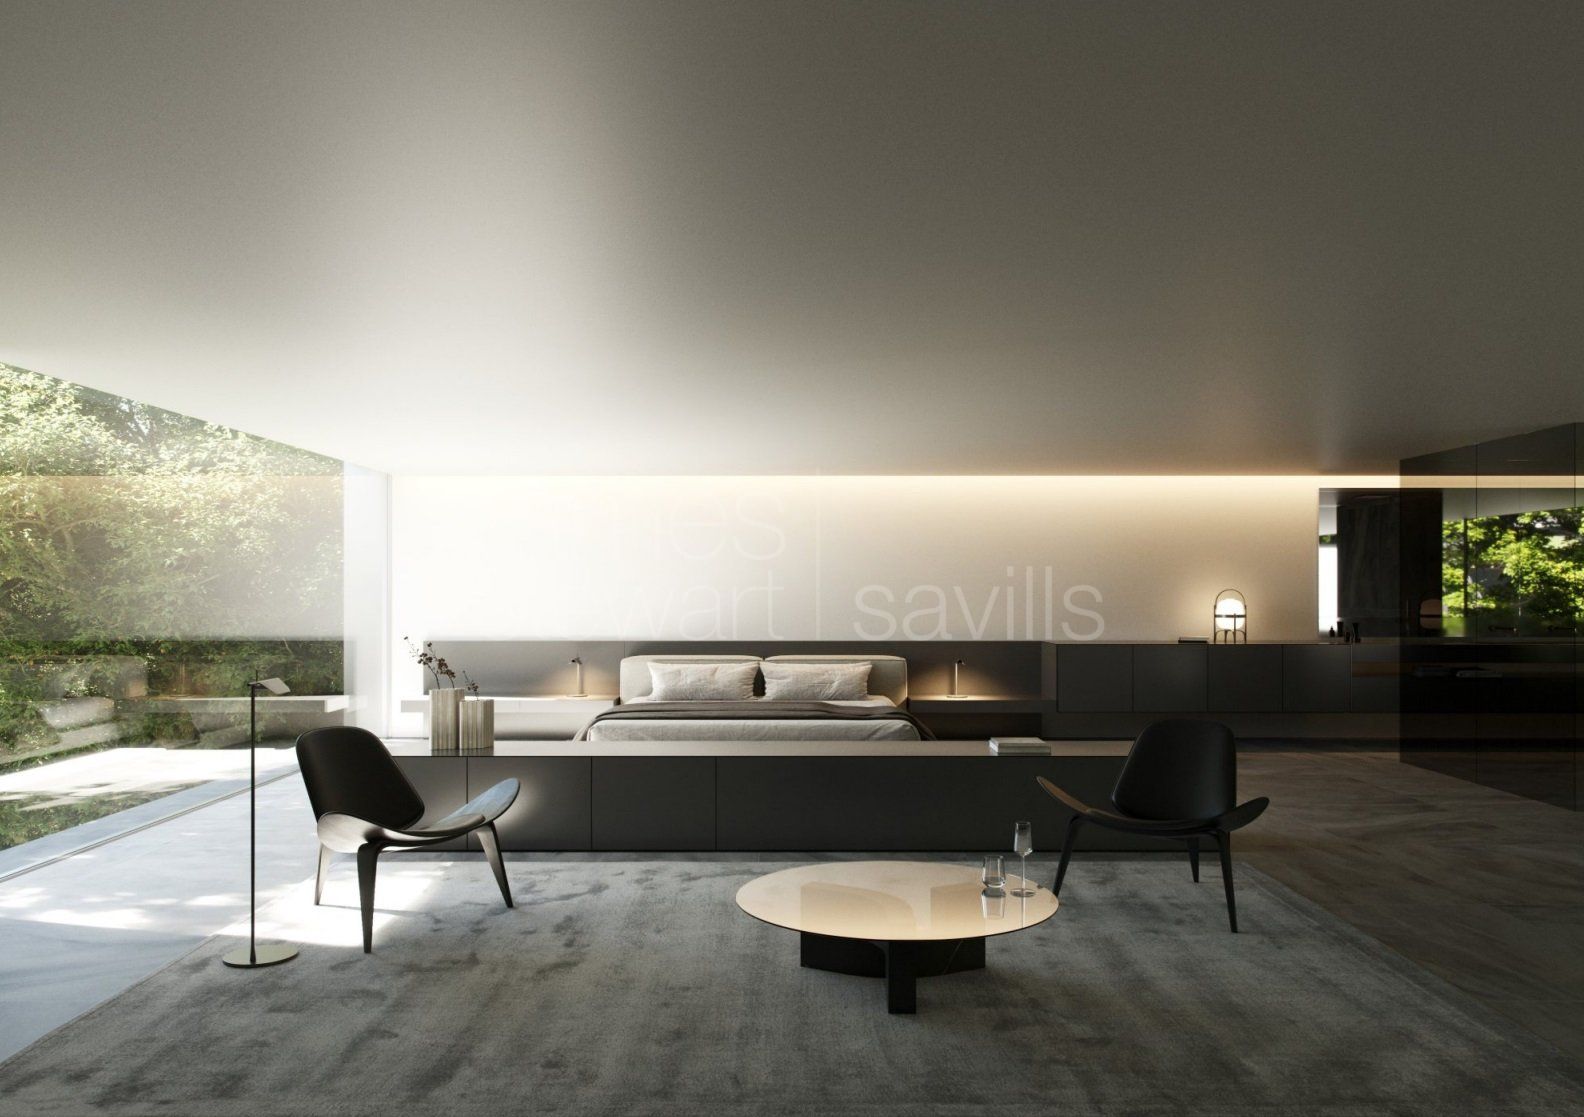 Sustainable Villa with Avant-Garde Design by Fran Silvestre Arquitectos